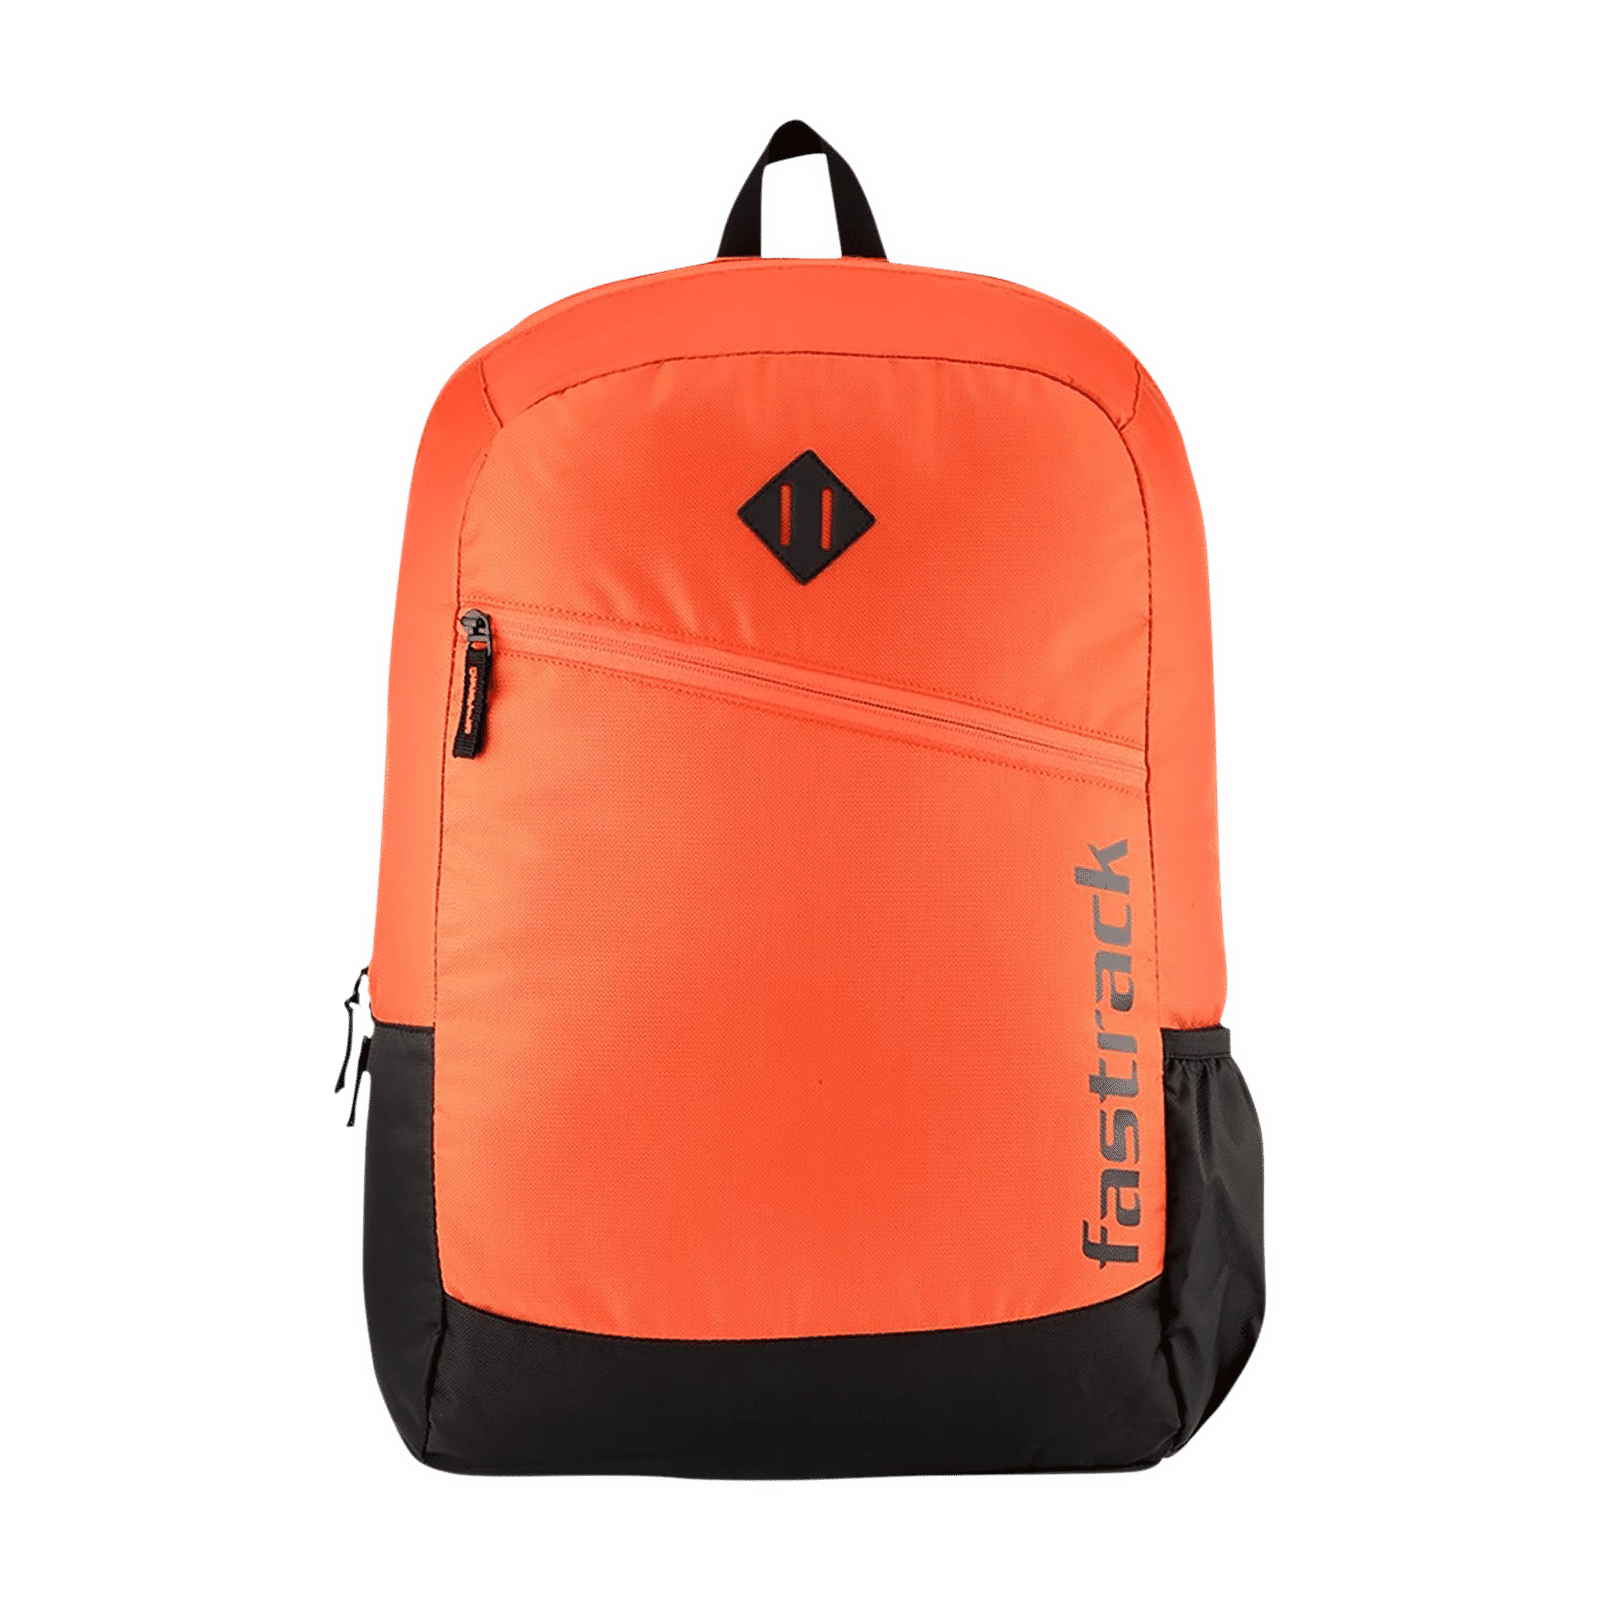 Buy croma 38 cm Backpack Black [XL5177] Online - Best Price croma 38 cm  Backpack Black [XL5177] - Justdial Shop Online.